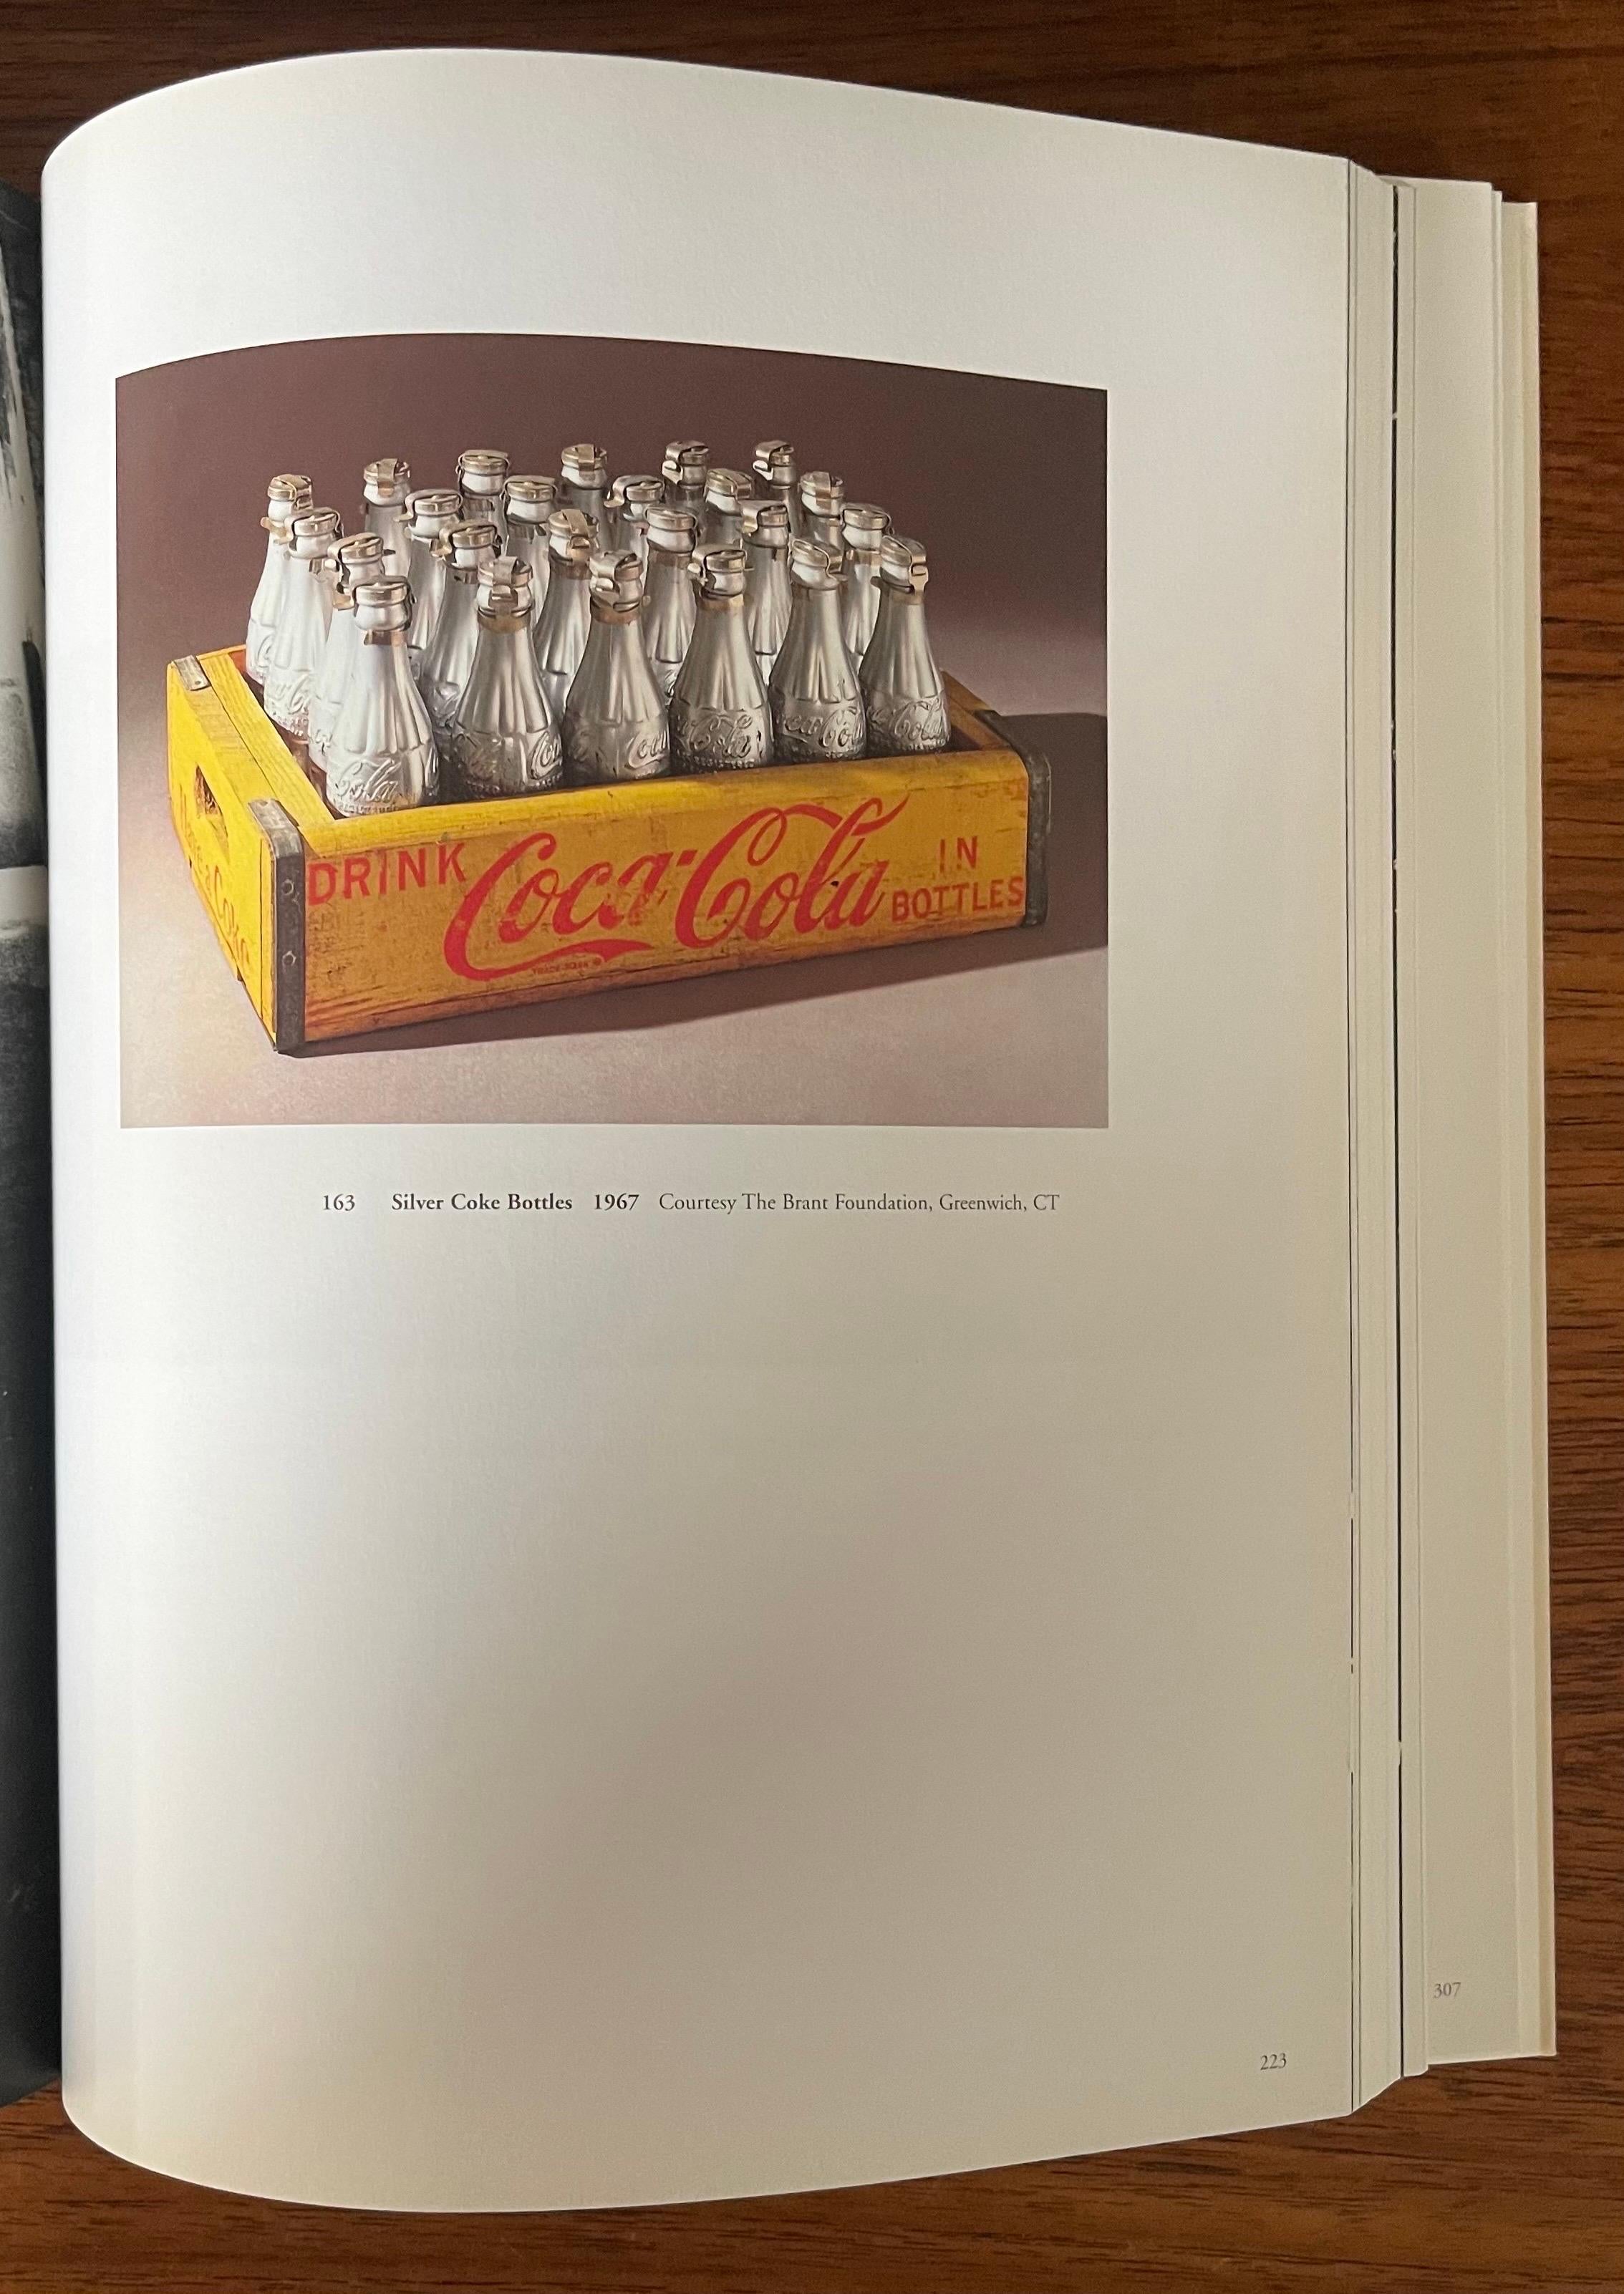 Livres d'art rétrospectifs et programmes d'expositions Moca LA 2002 de Warhol en vente 2